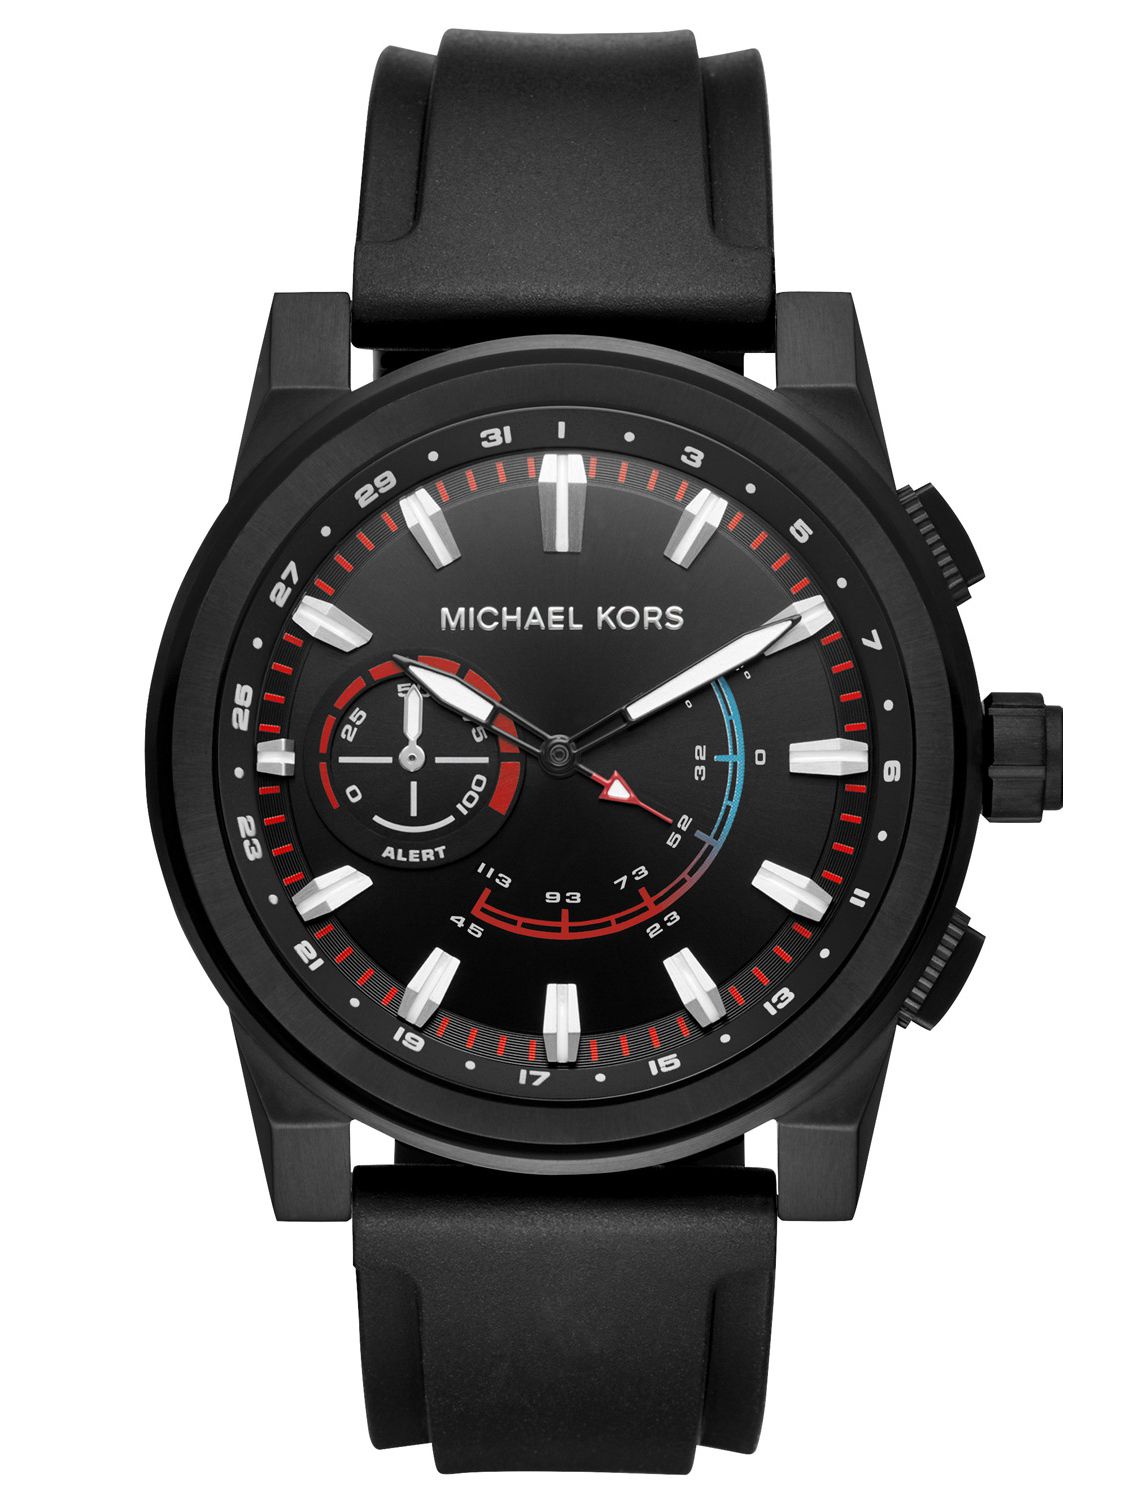 michael kors hybrid watch review Shop 